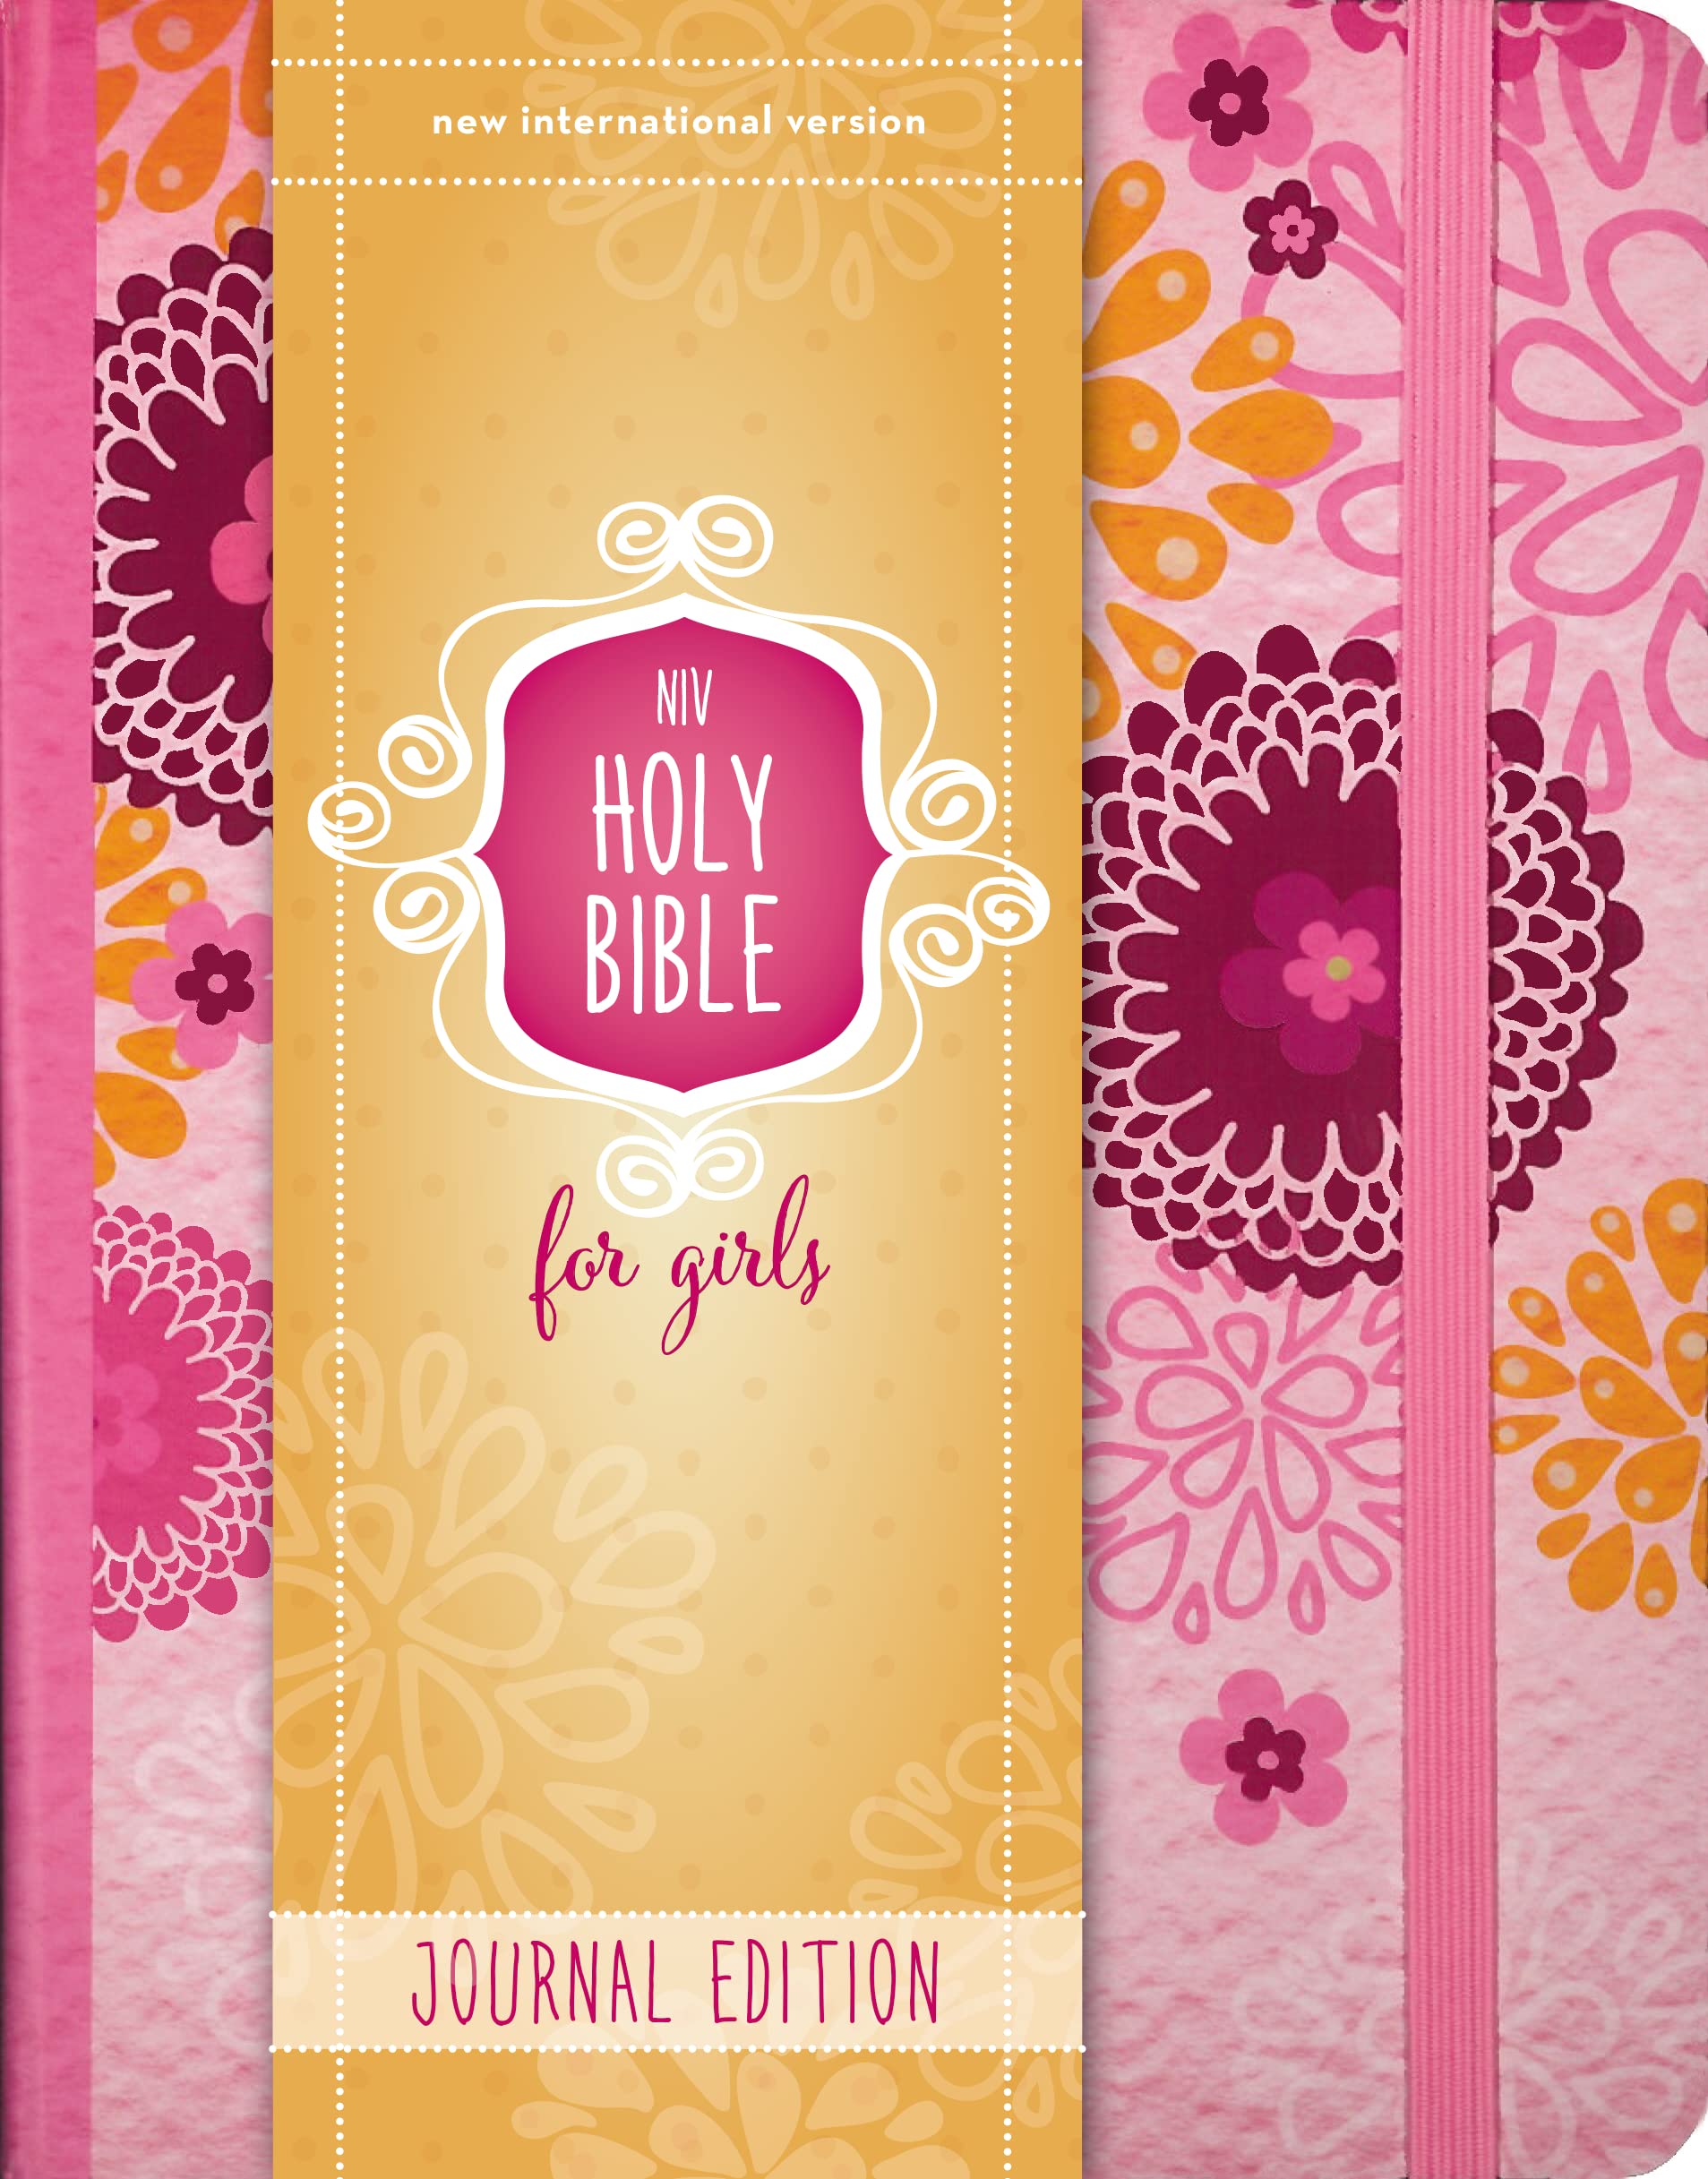 NIV HOLY BIBLE FOR GIRLS (JOURNAL EDITION)